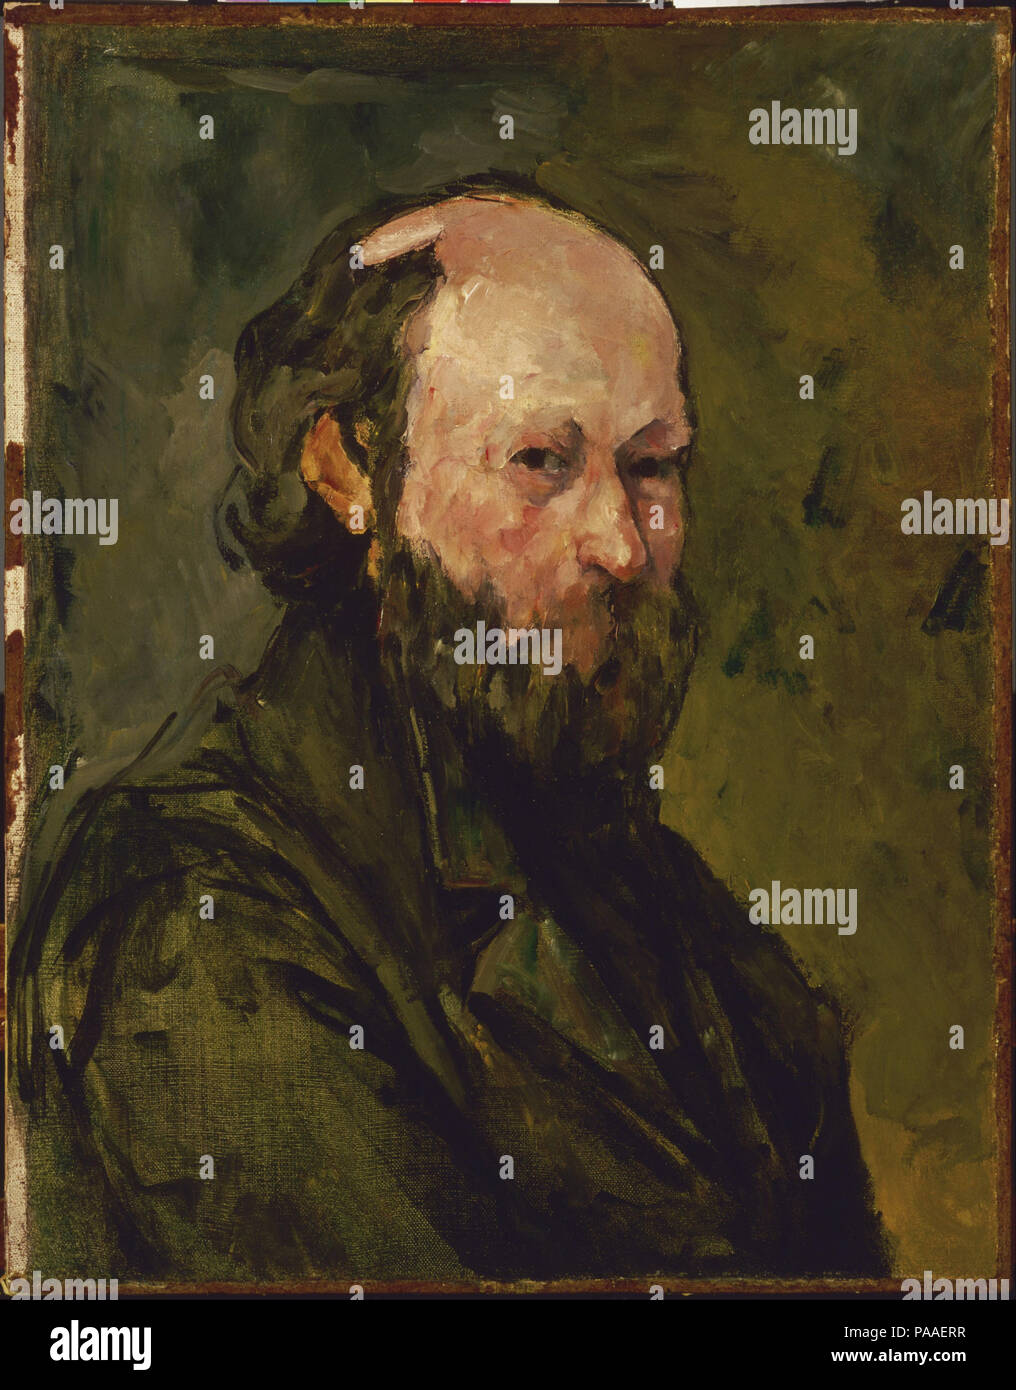 193 Paul Cézanne - Self-Portrait - Stock Photo